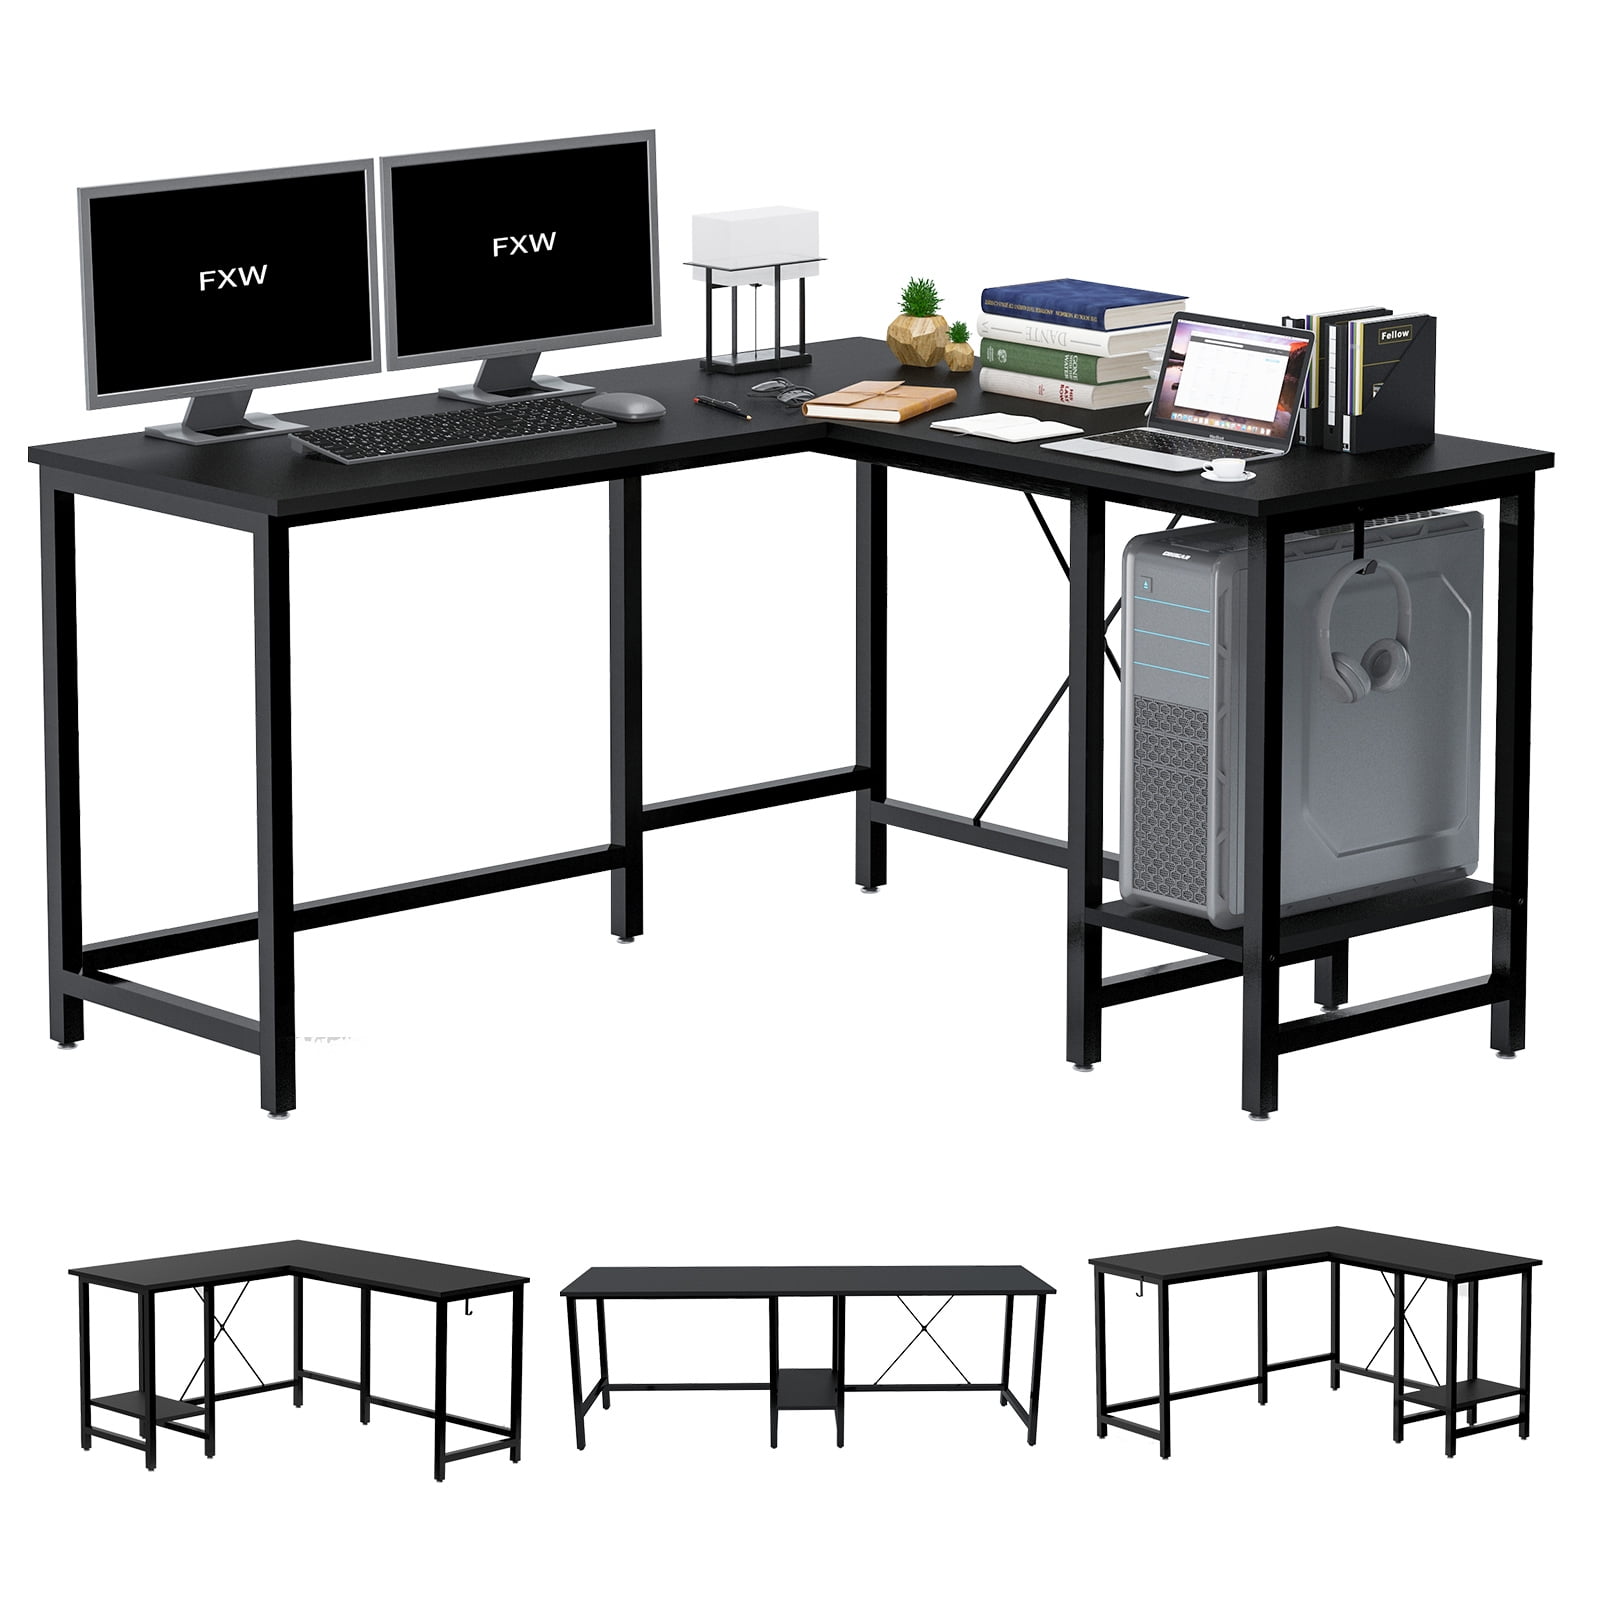 Details about   55" Home Office Computer Desk Workstation Study PC Table Black 